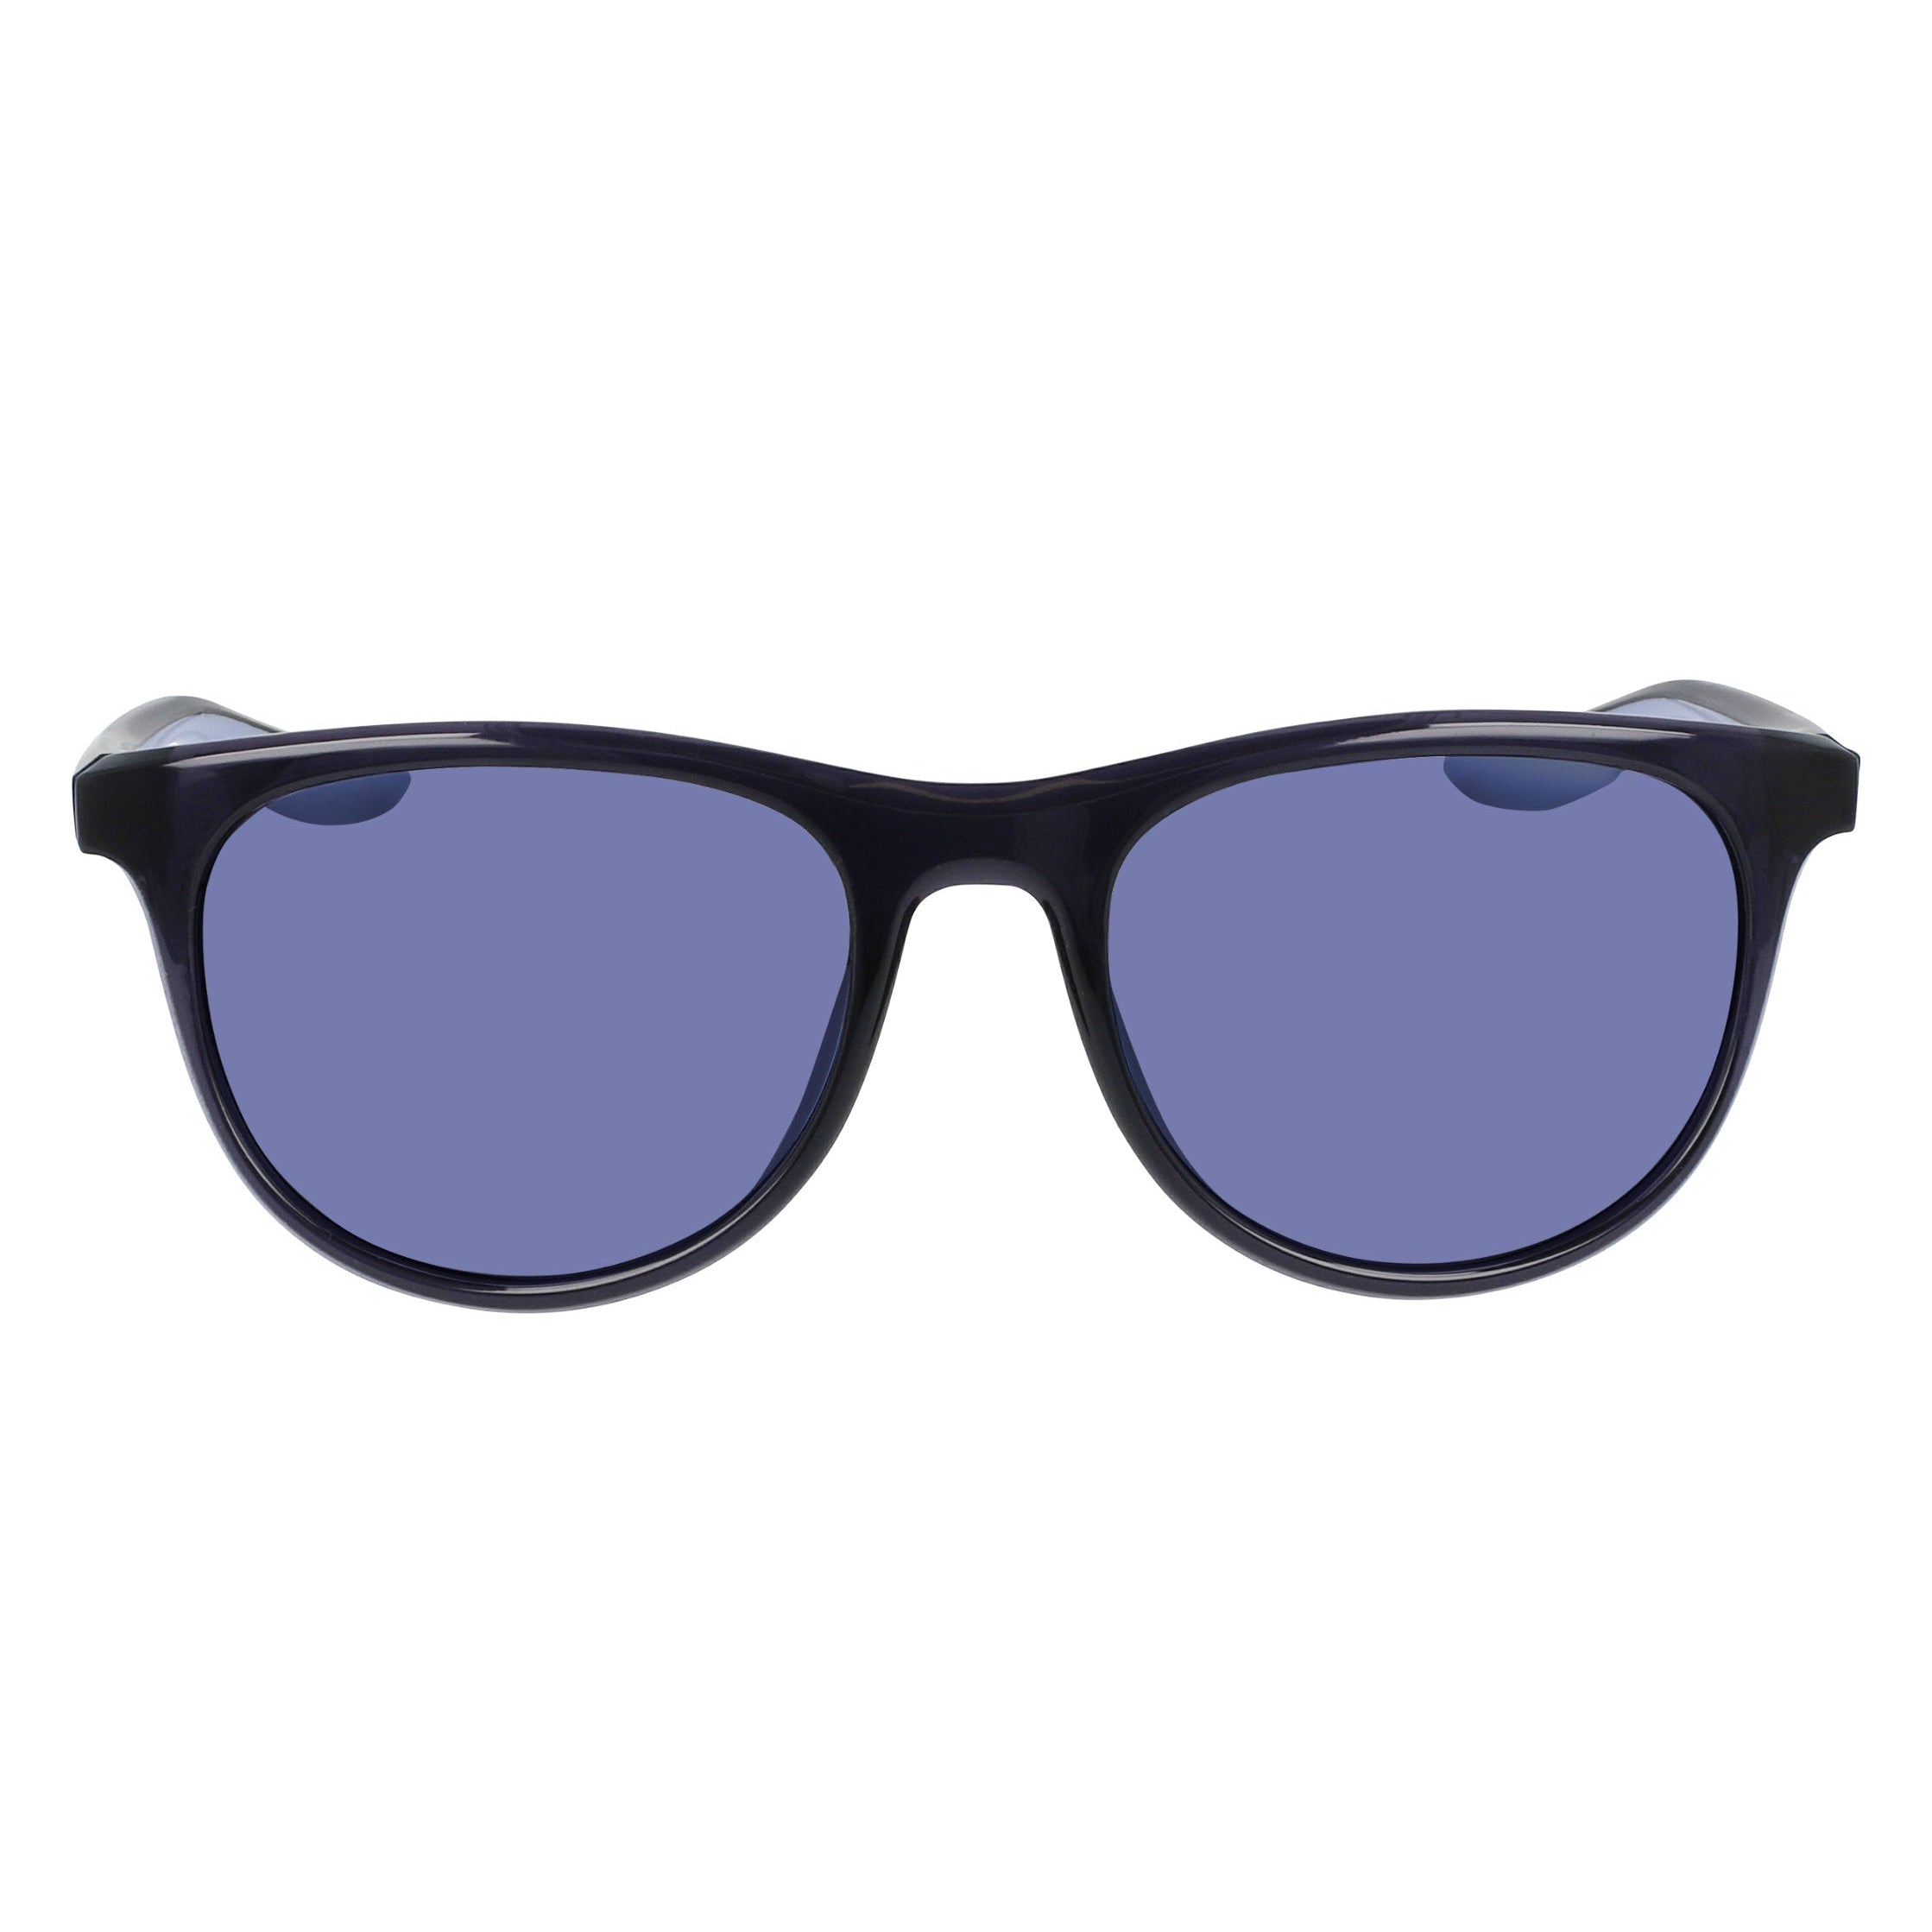 Nike Sunglasses Wave C.Purple/Violet Mirror Lens